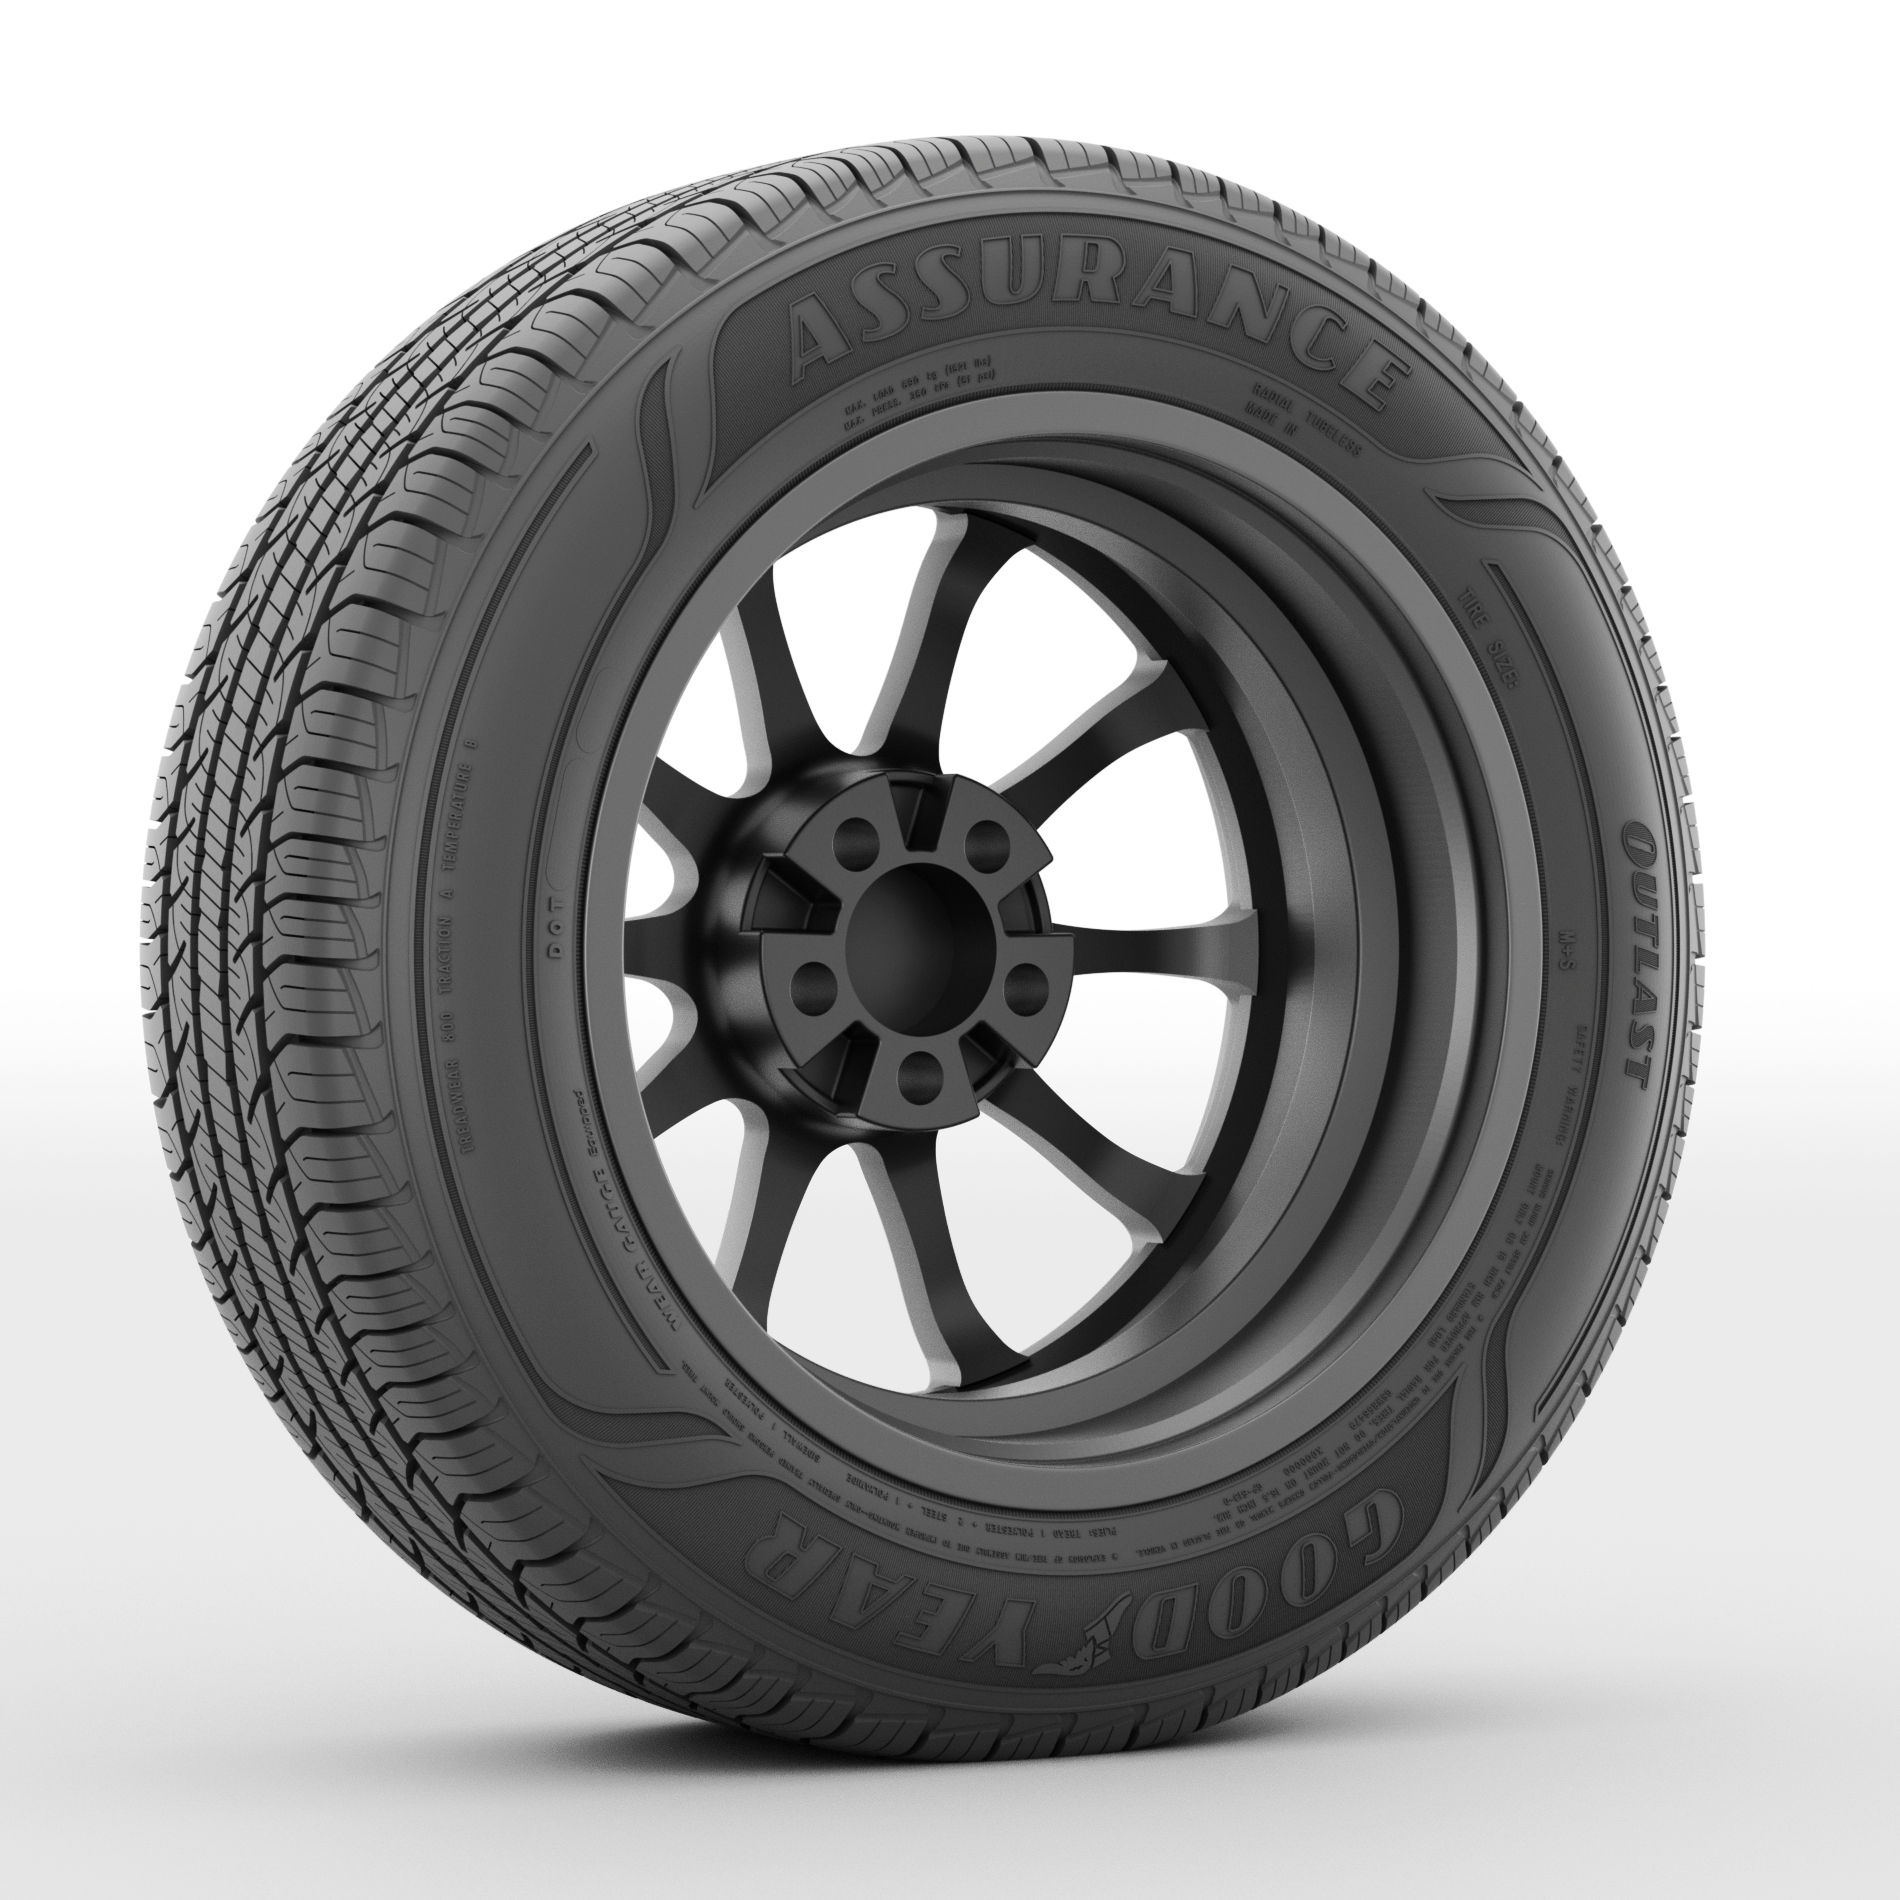 Assurance All-Season Tire 104H Outlast Goodyear 235/65R17